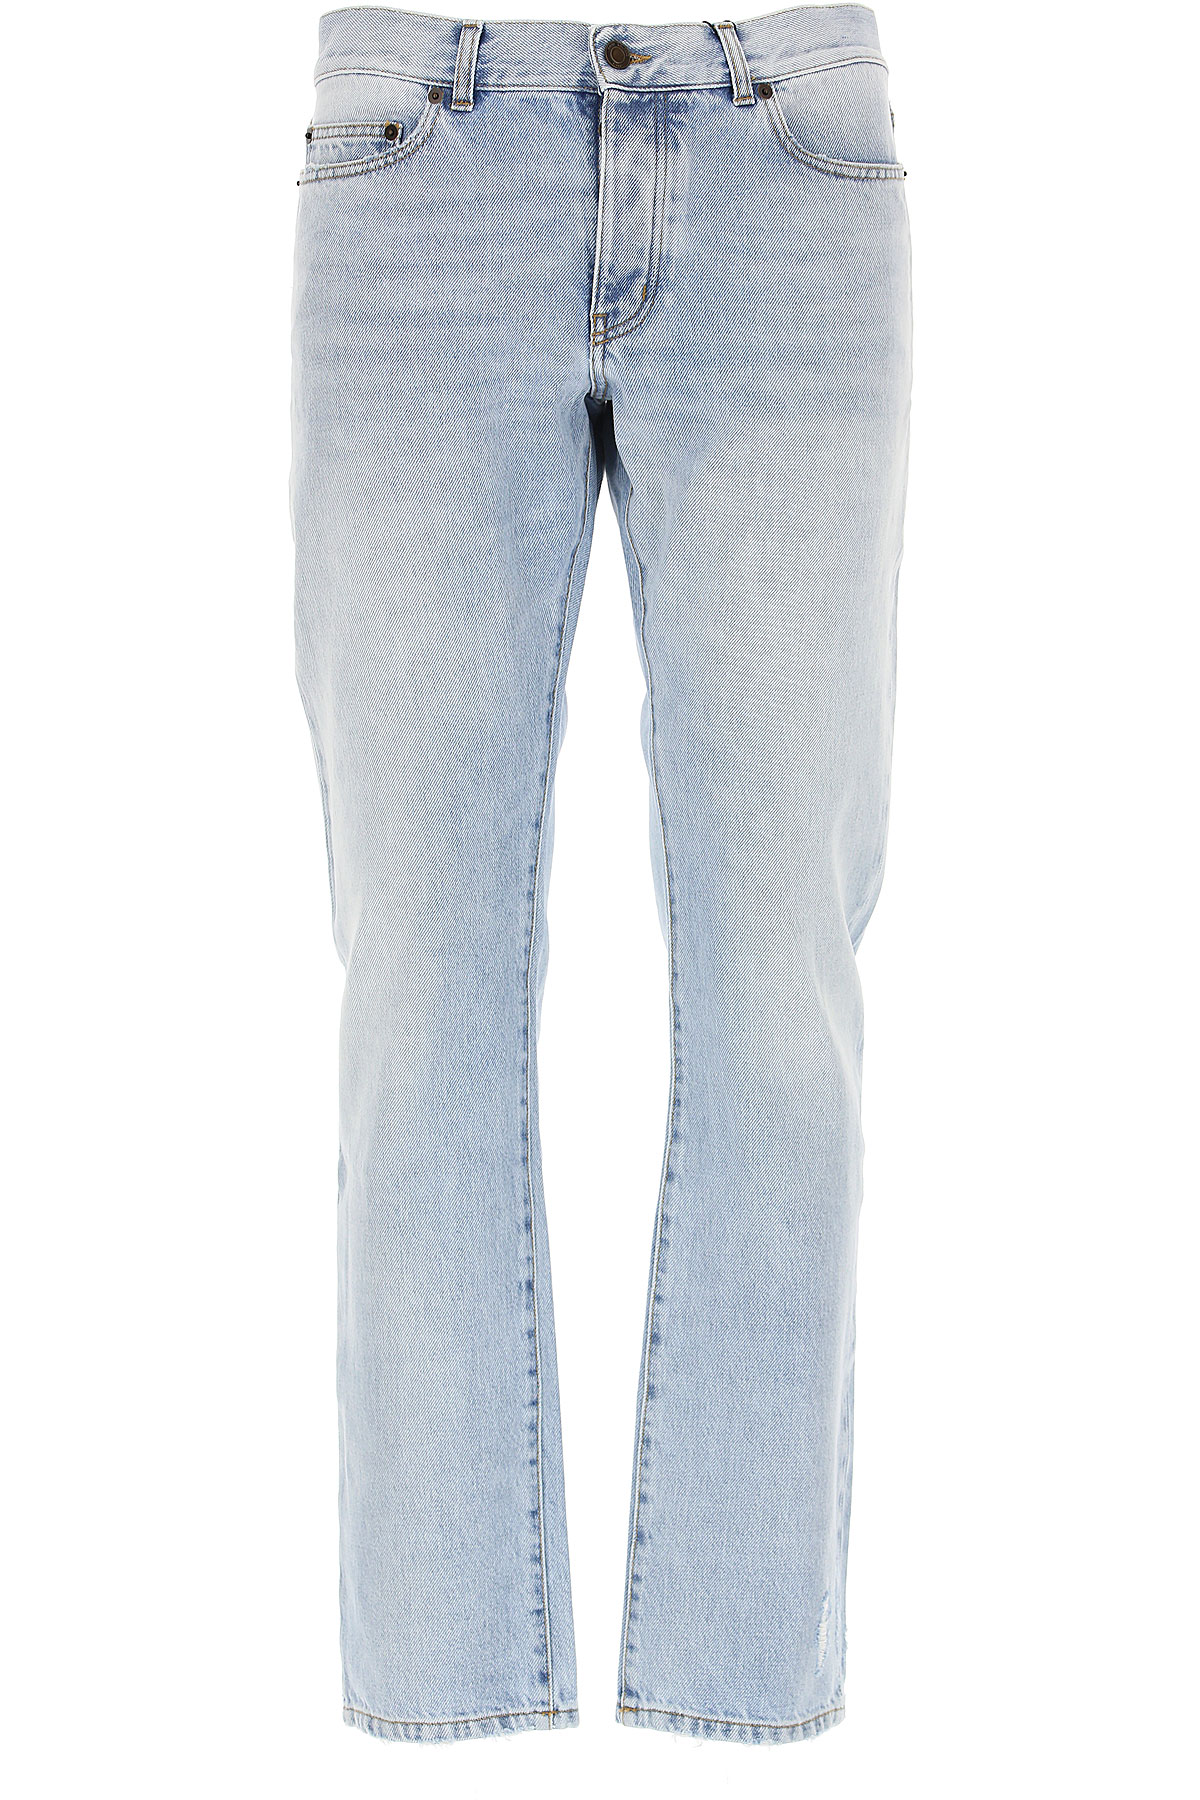 Yves Saint Laurent Jeans, Bluejeans, Denim Jeans für Herren Günstig im Outlet Sale, Helles Denim, Baumwolle, 2017, 46 47 48 49 50